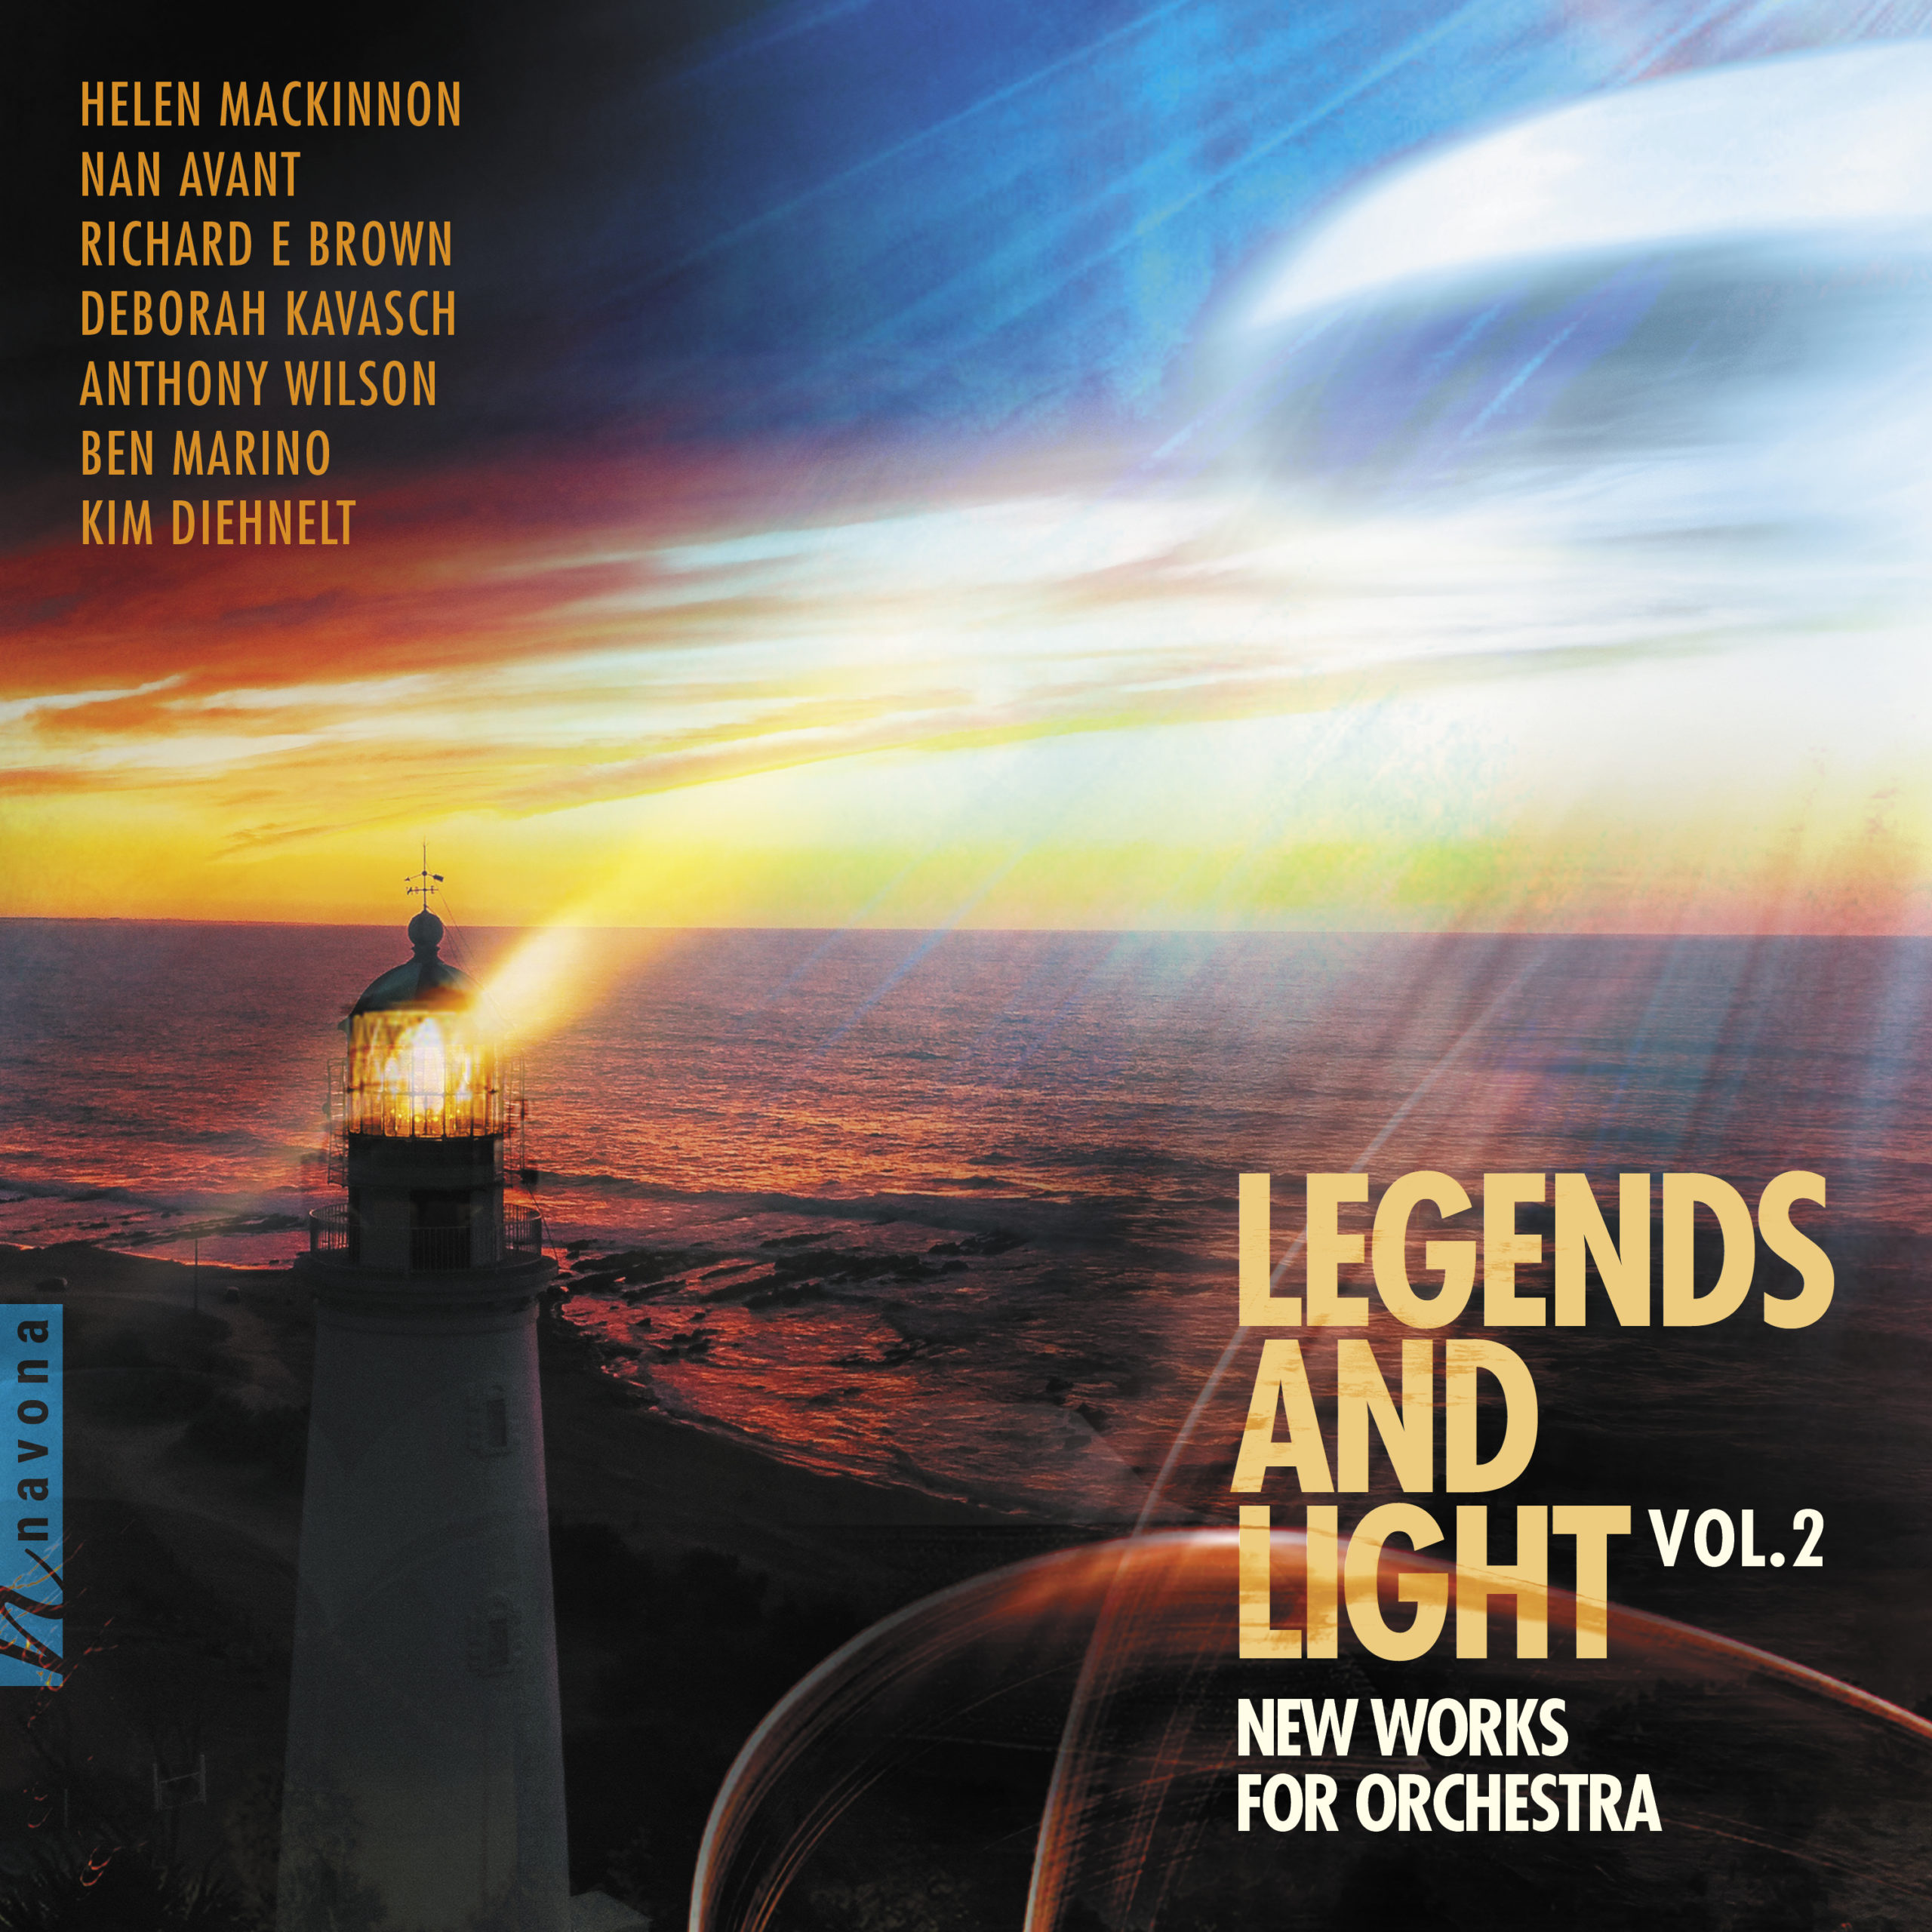 nv6399-Legends_&_Light_Vol_2-album_front_cover